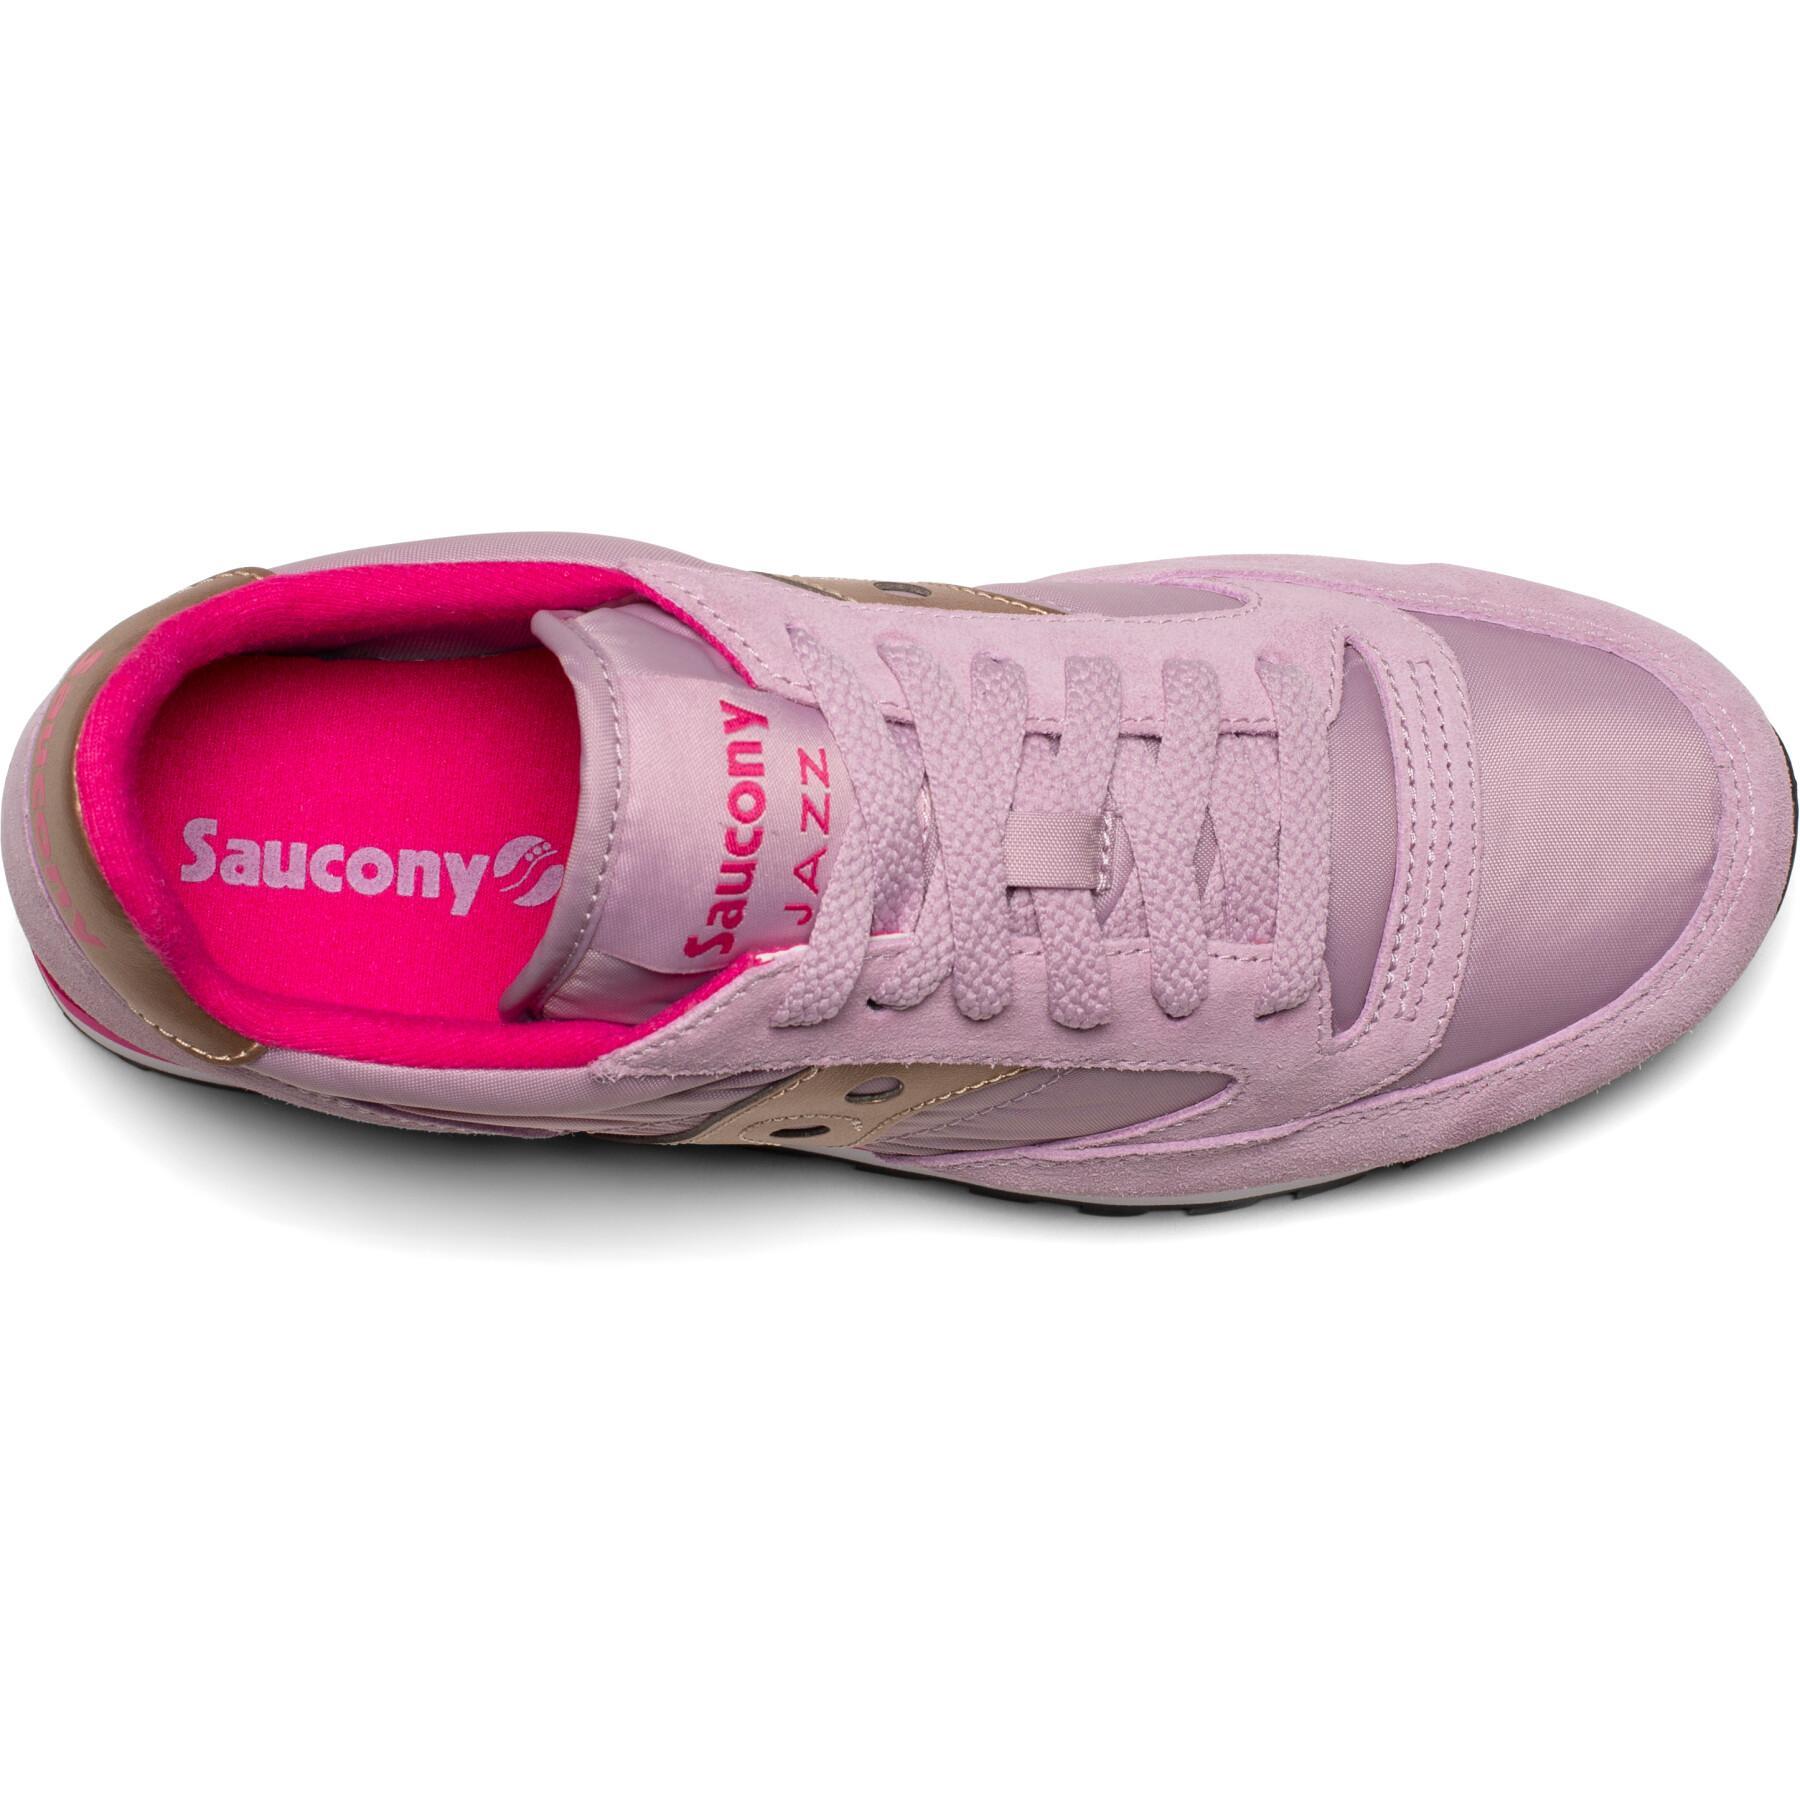 Saucony jazz original women's shoes